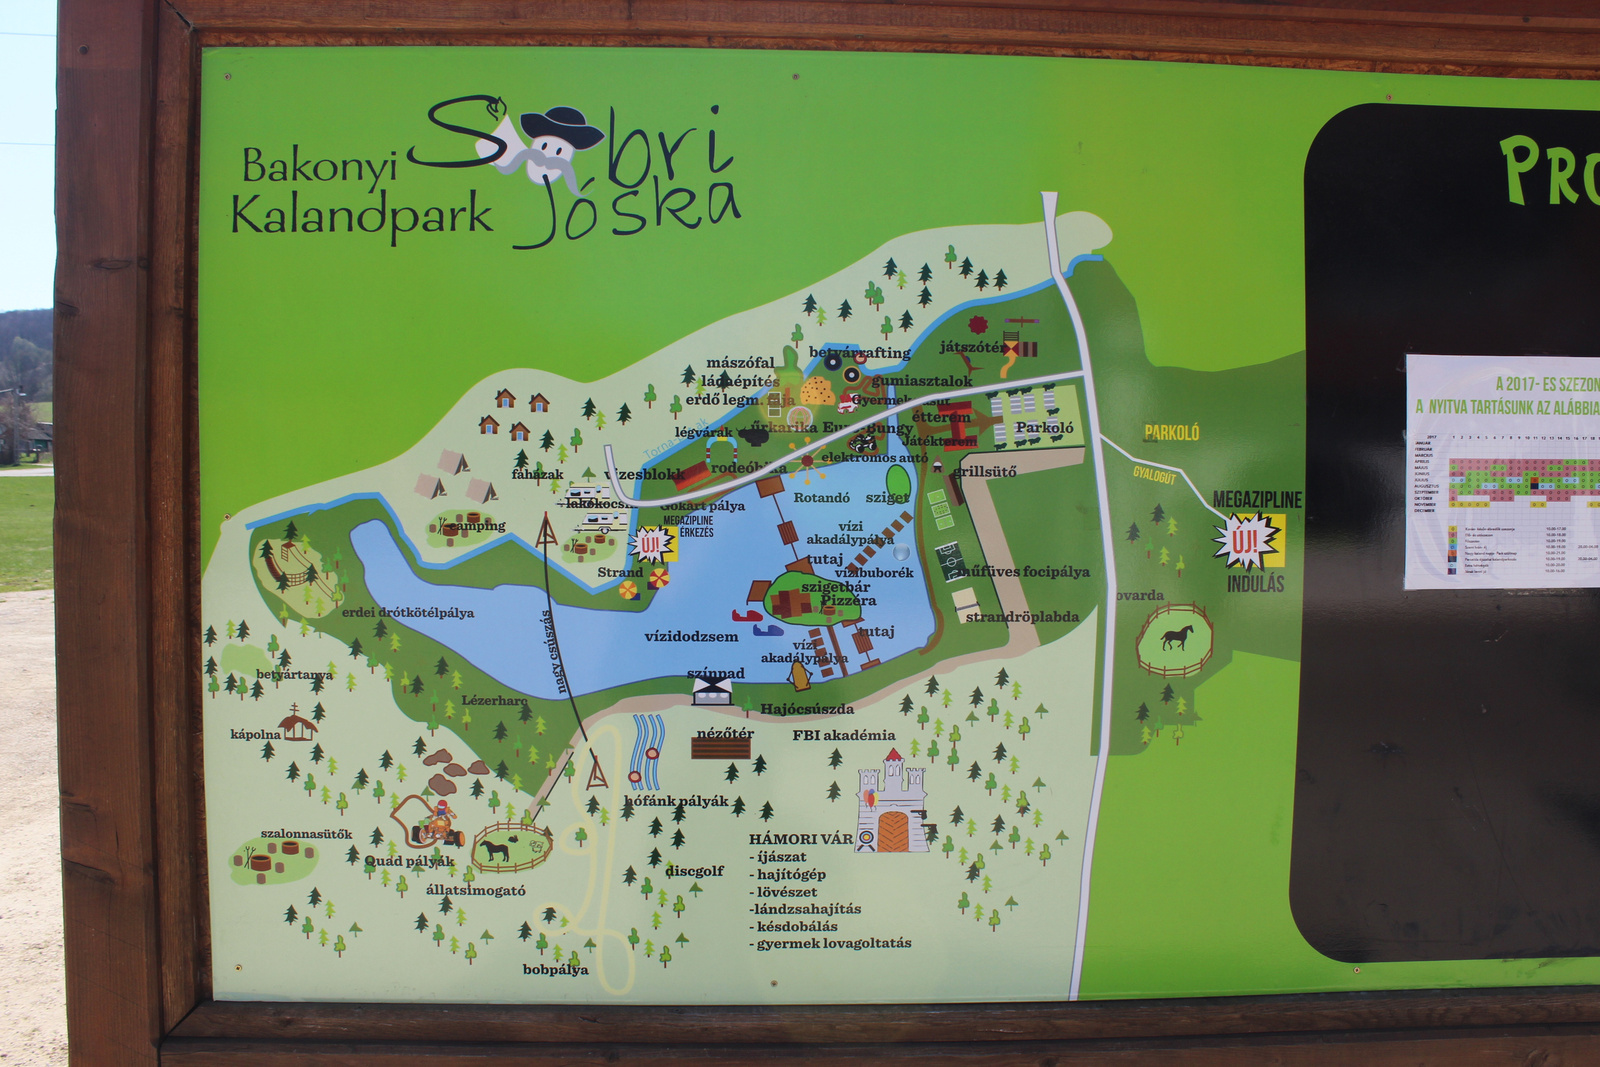 20170402-50-SobriJoskaKalandpark